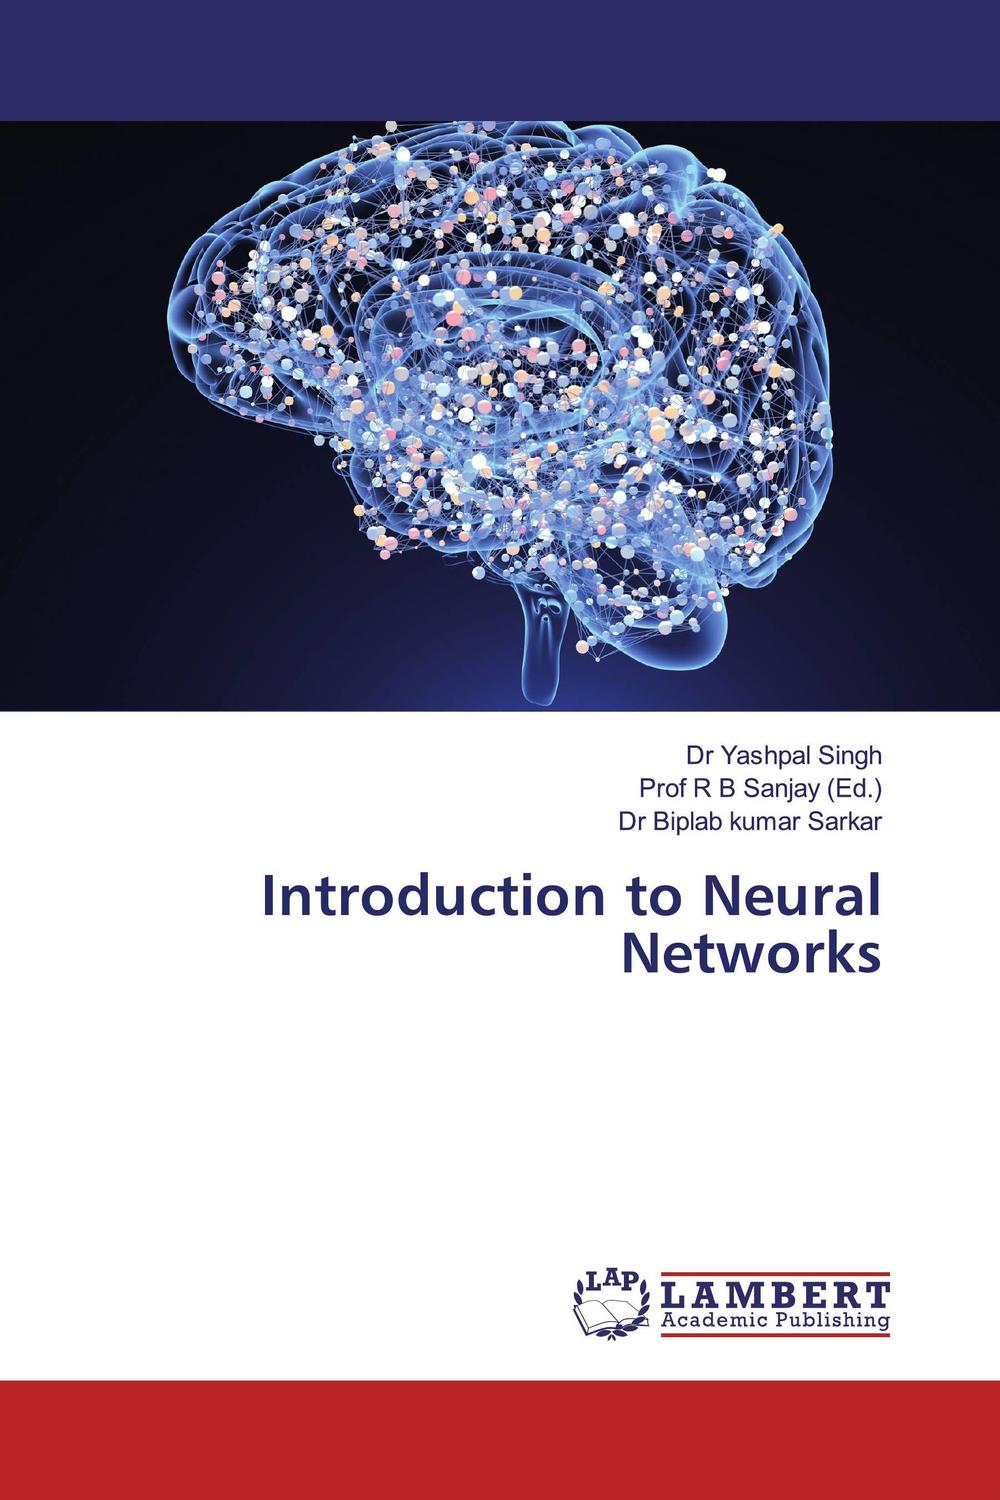 Introduction to Neural Networks - Dr Yashpal Singh, Dr Biplab kumar Sarkar, Prof R B Sanjay,,